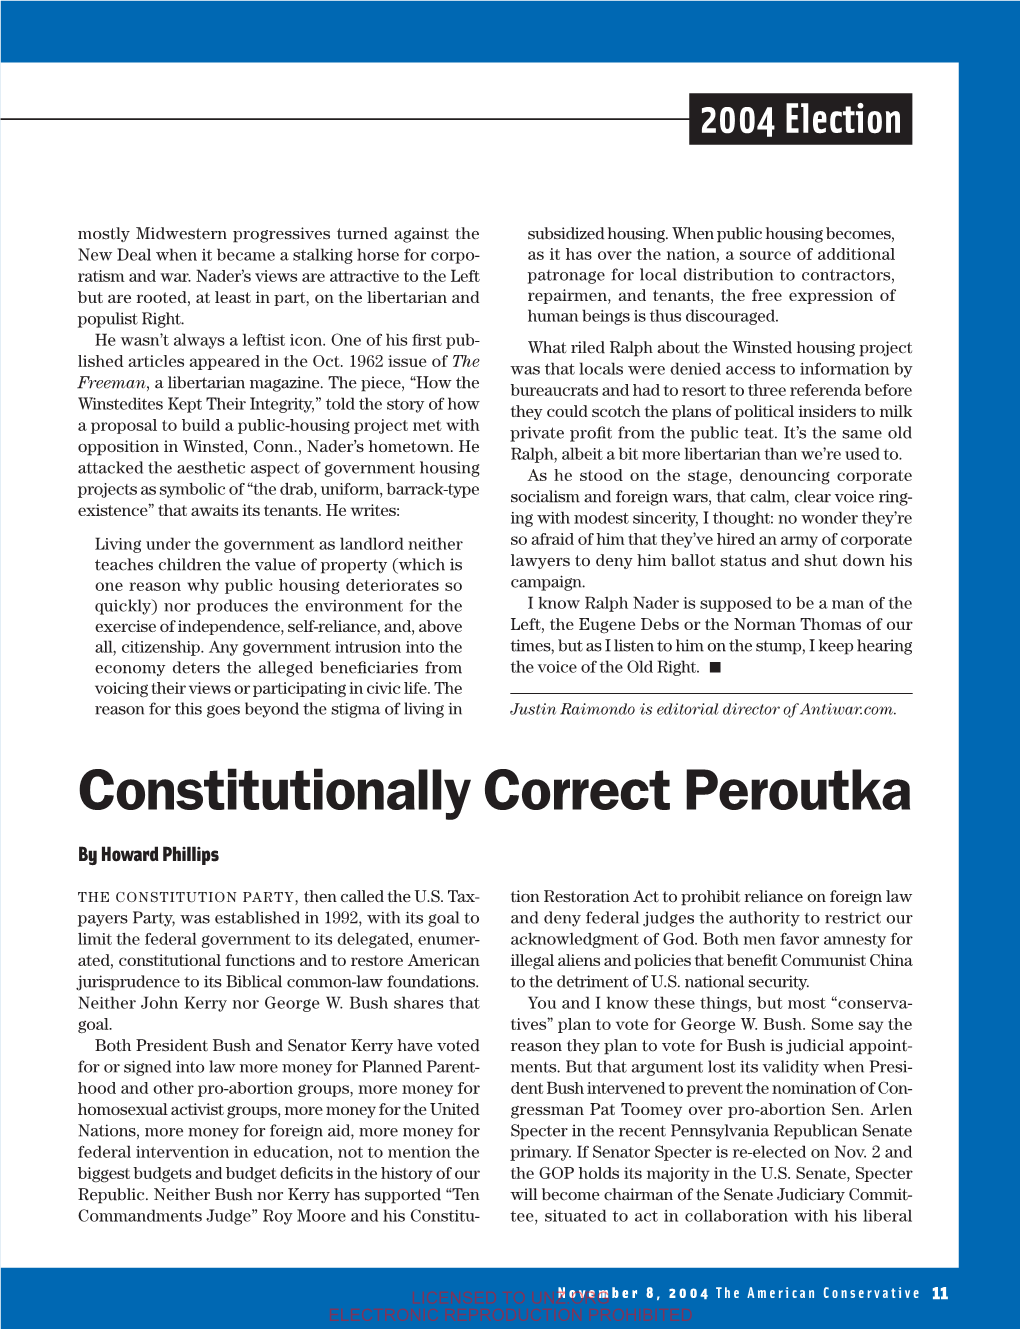 Constitutionally Correct Peroutka